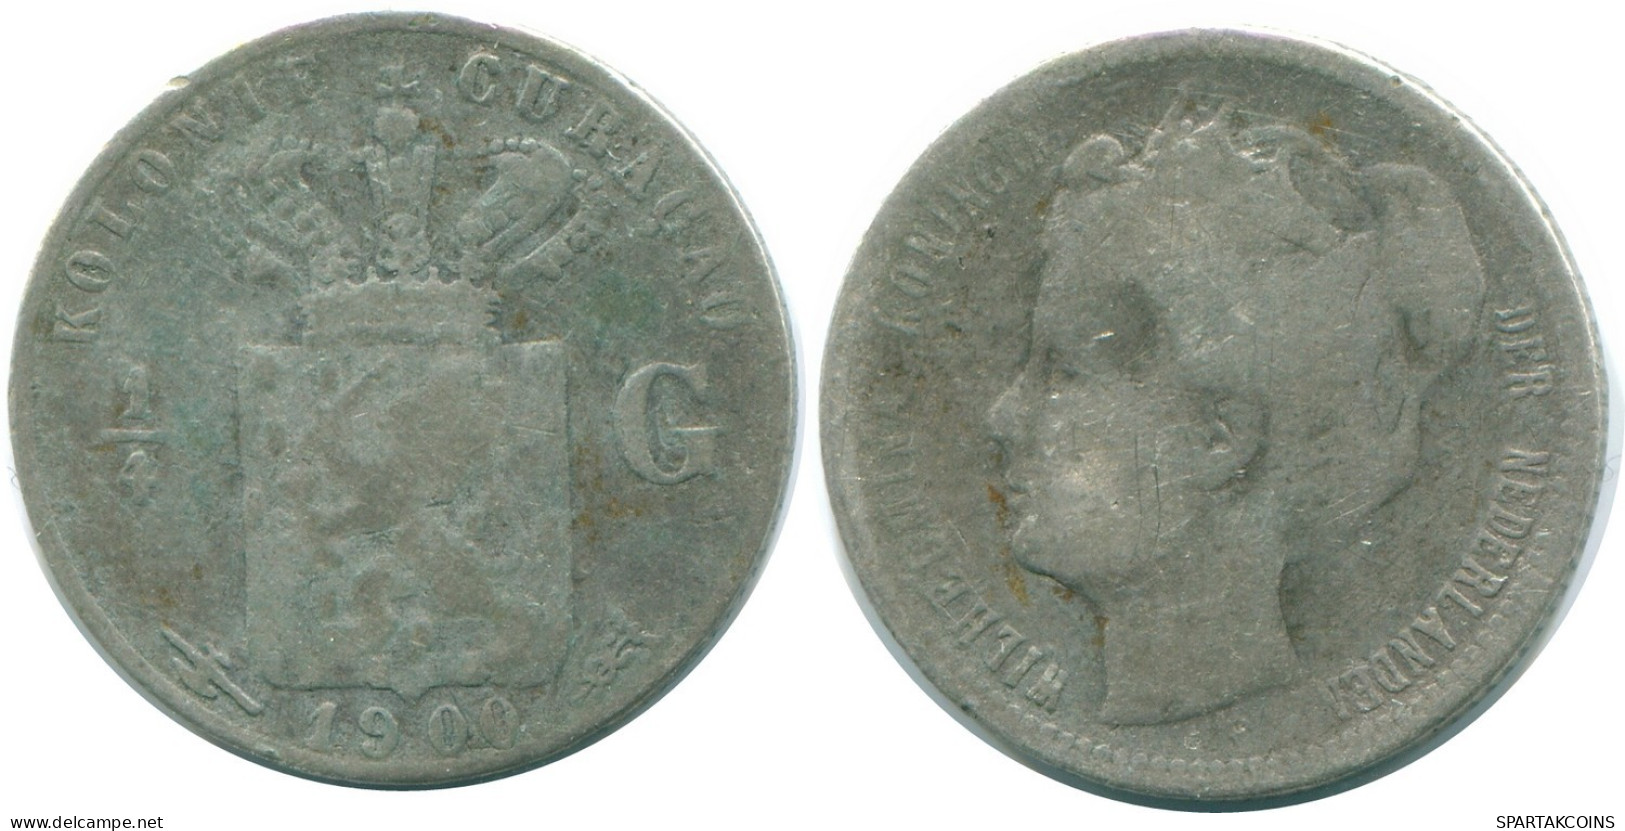 1/4 GULDEN 1900 CURACAO Netherlands SILVER Colonial Coin #NL10489.4.U.A - Curacao